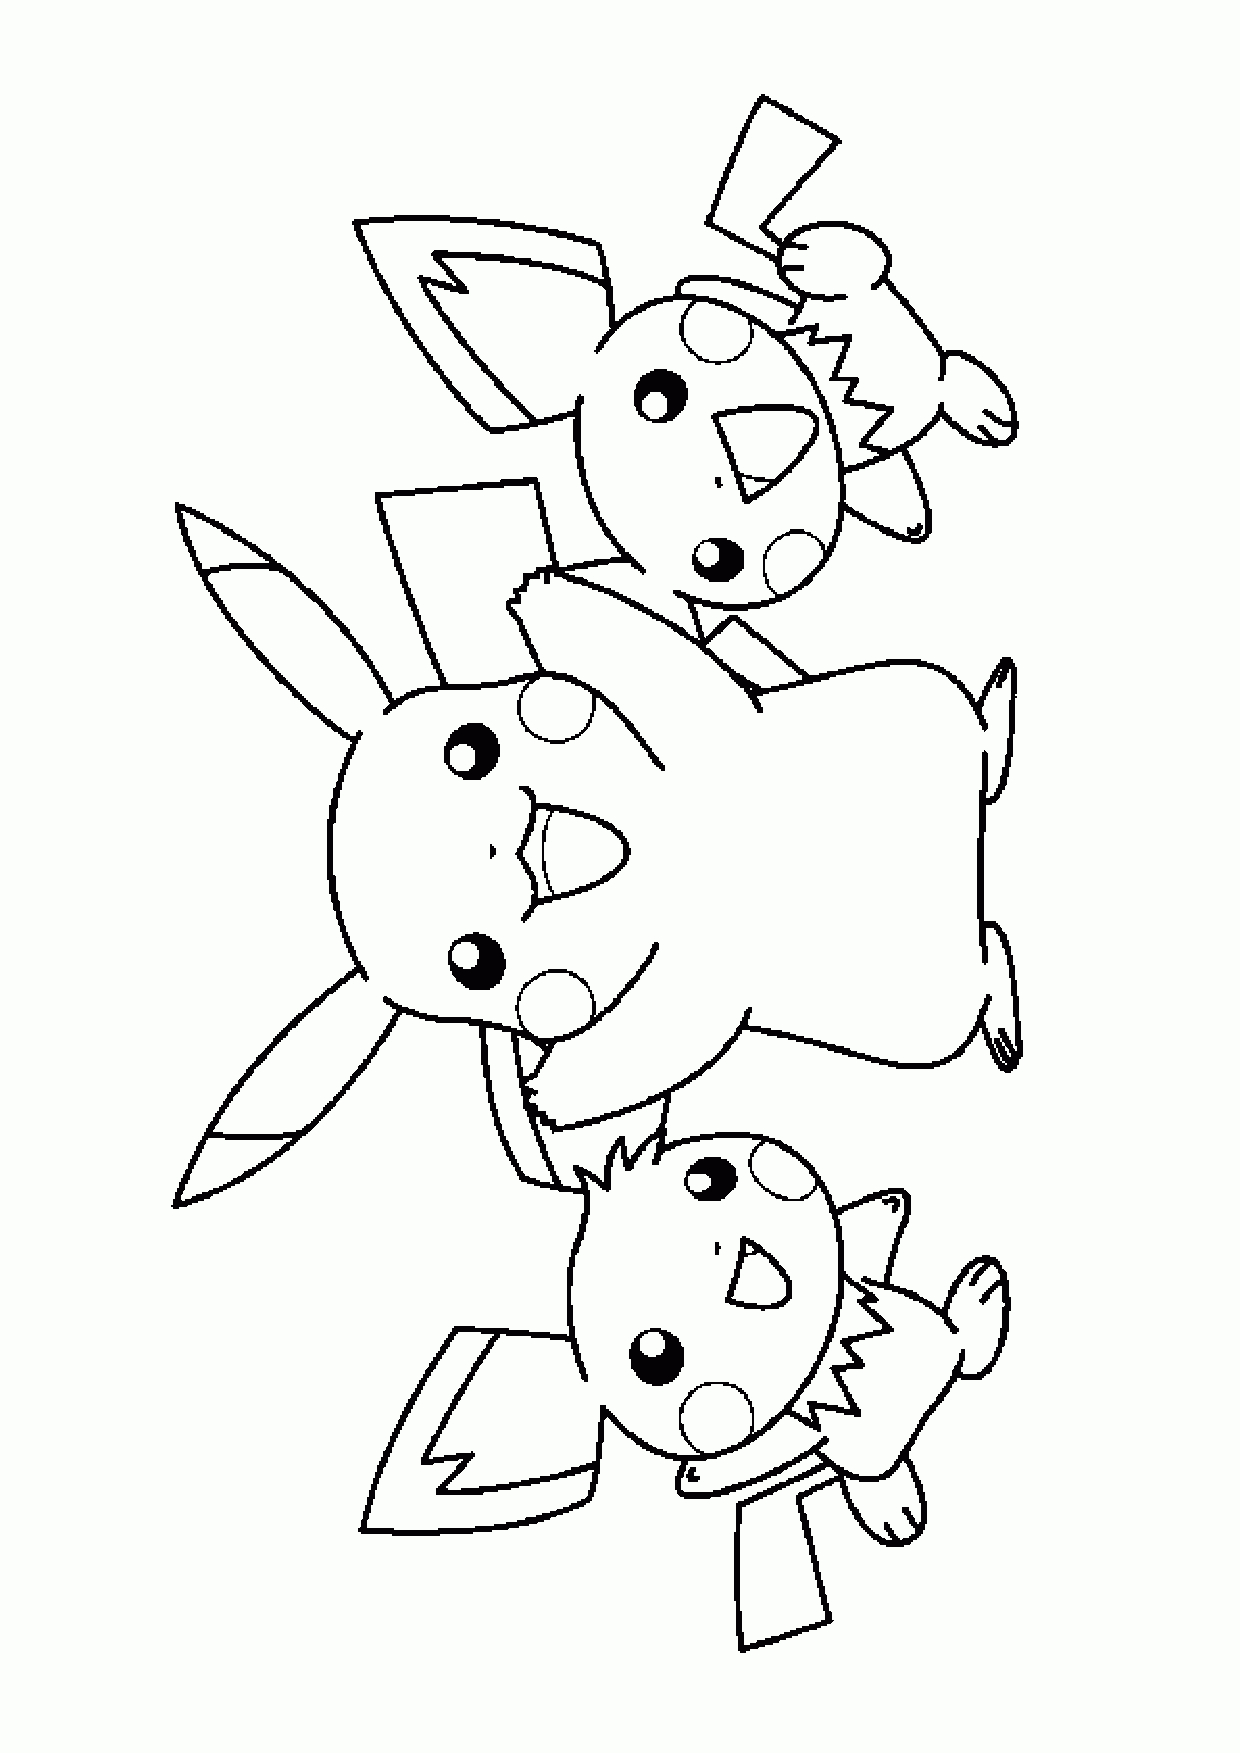 Dessin A Imprimer Pikachu Mignon destiné Dessin De Pikachu Facile